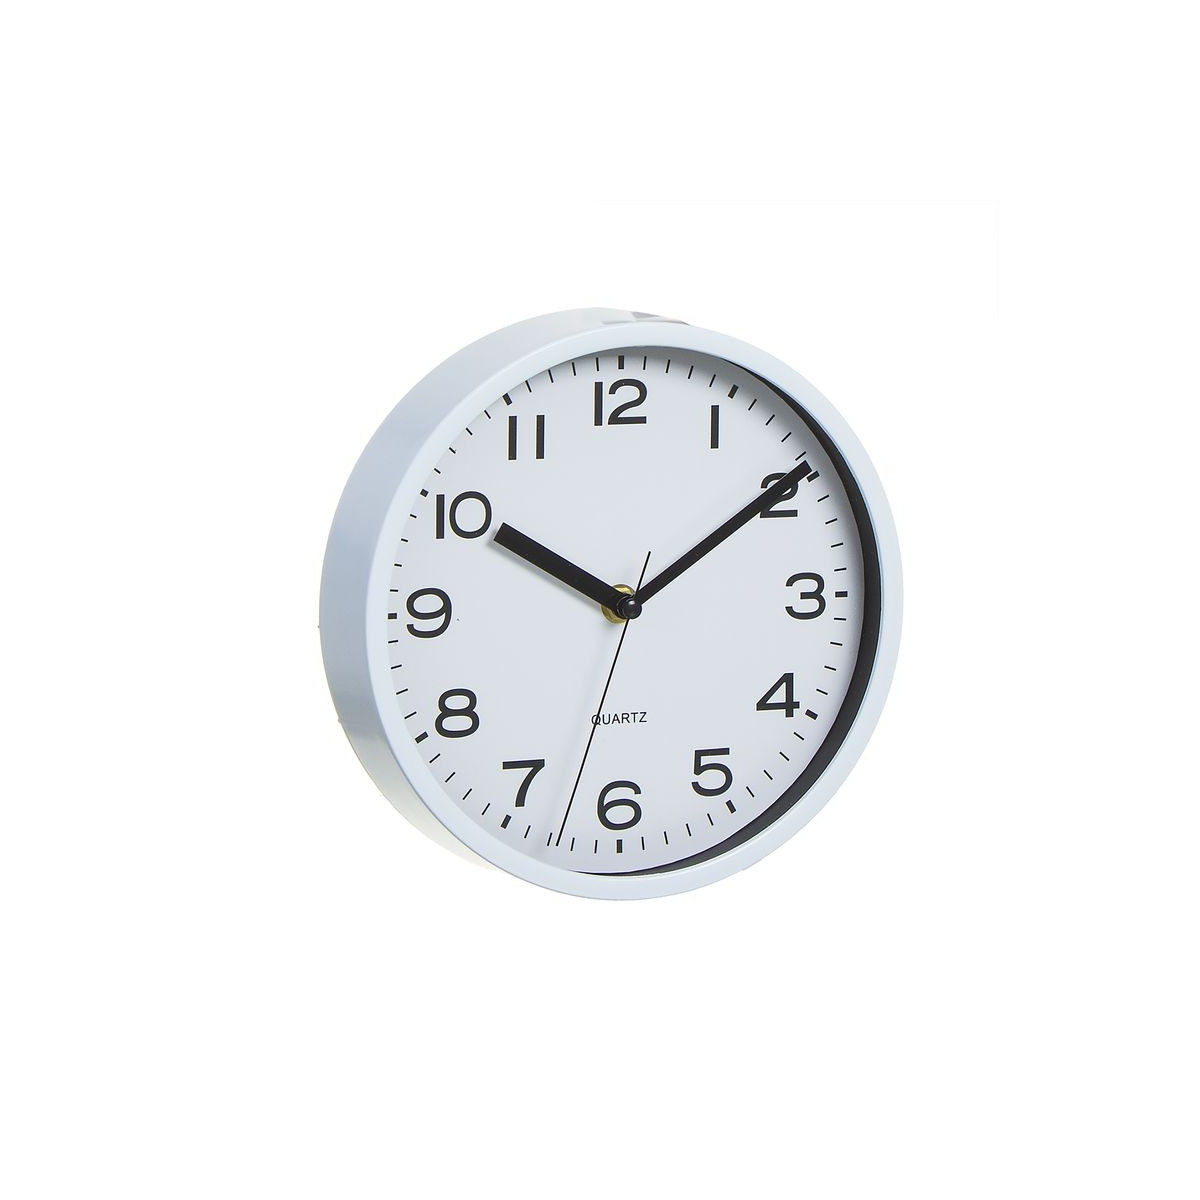 Reloj 20cm blanco